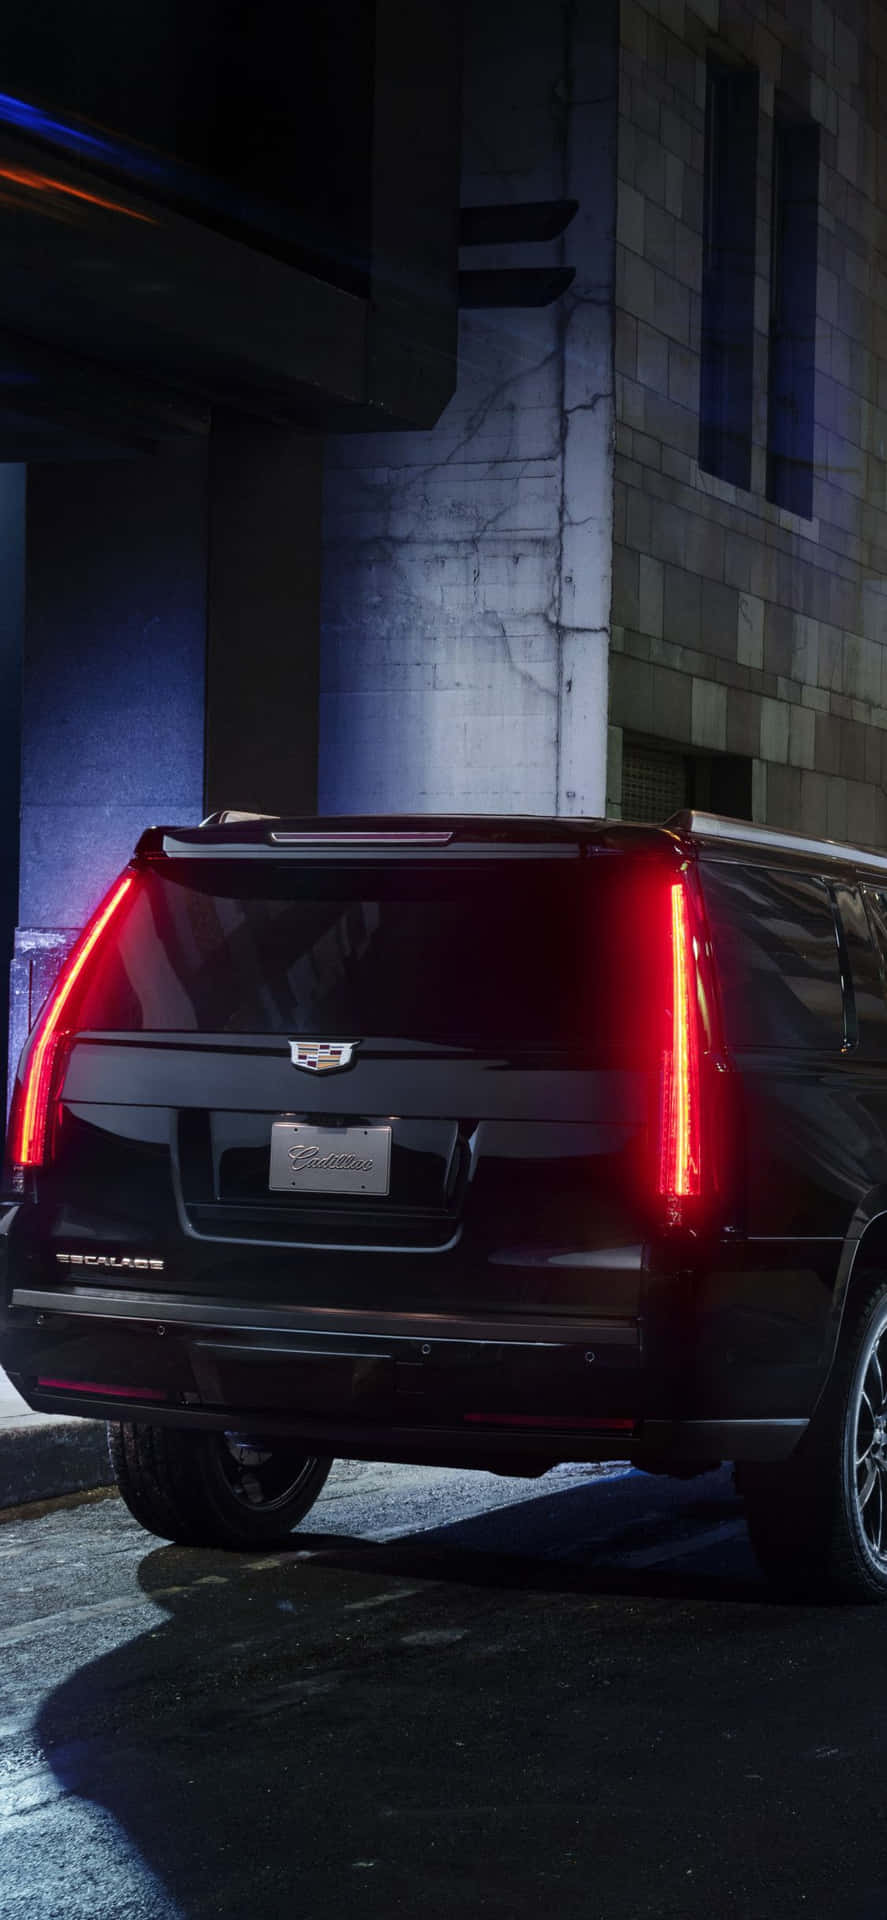 A luxurious Cadillac Escalade in a stunning cityscape Wallpaper